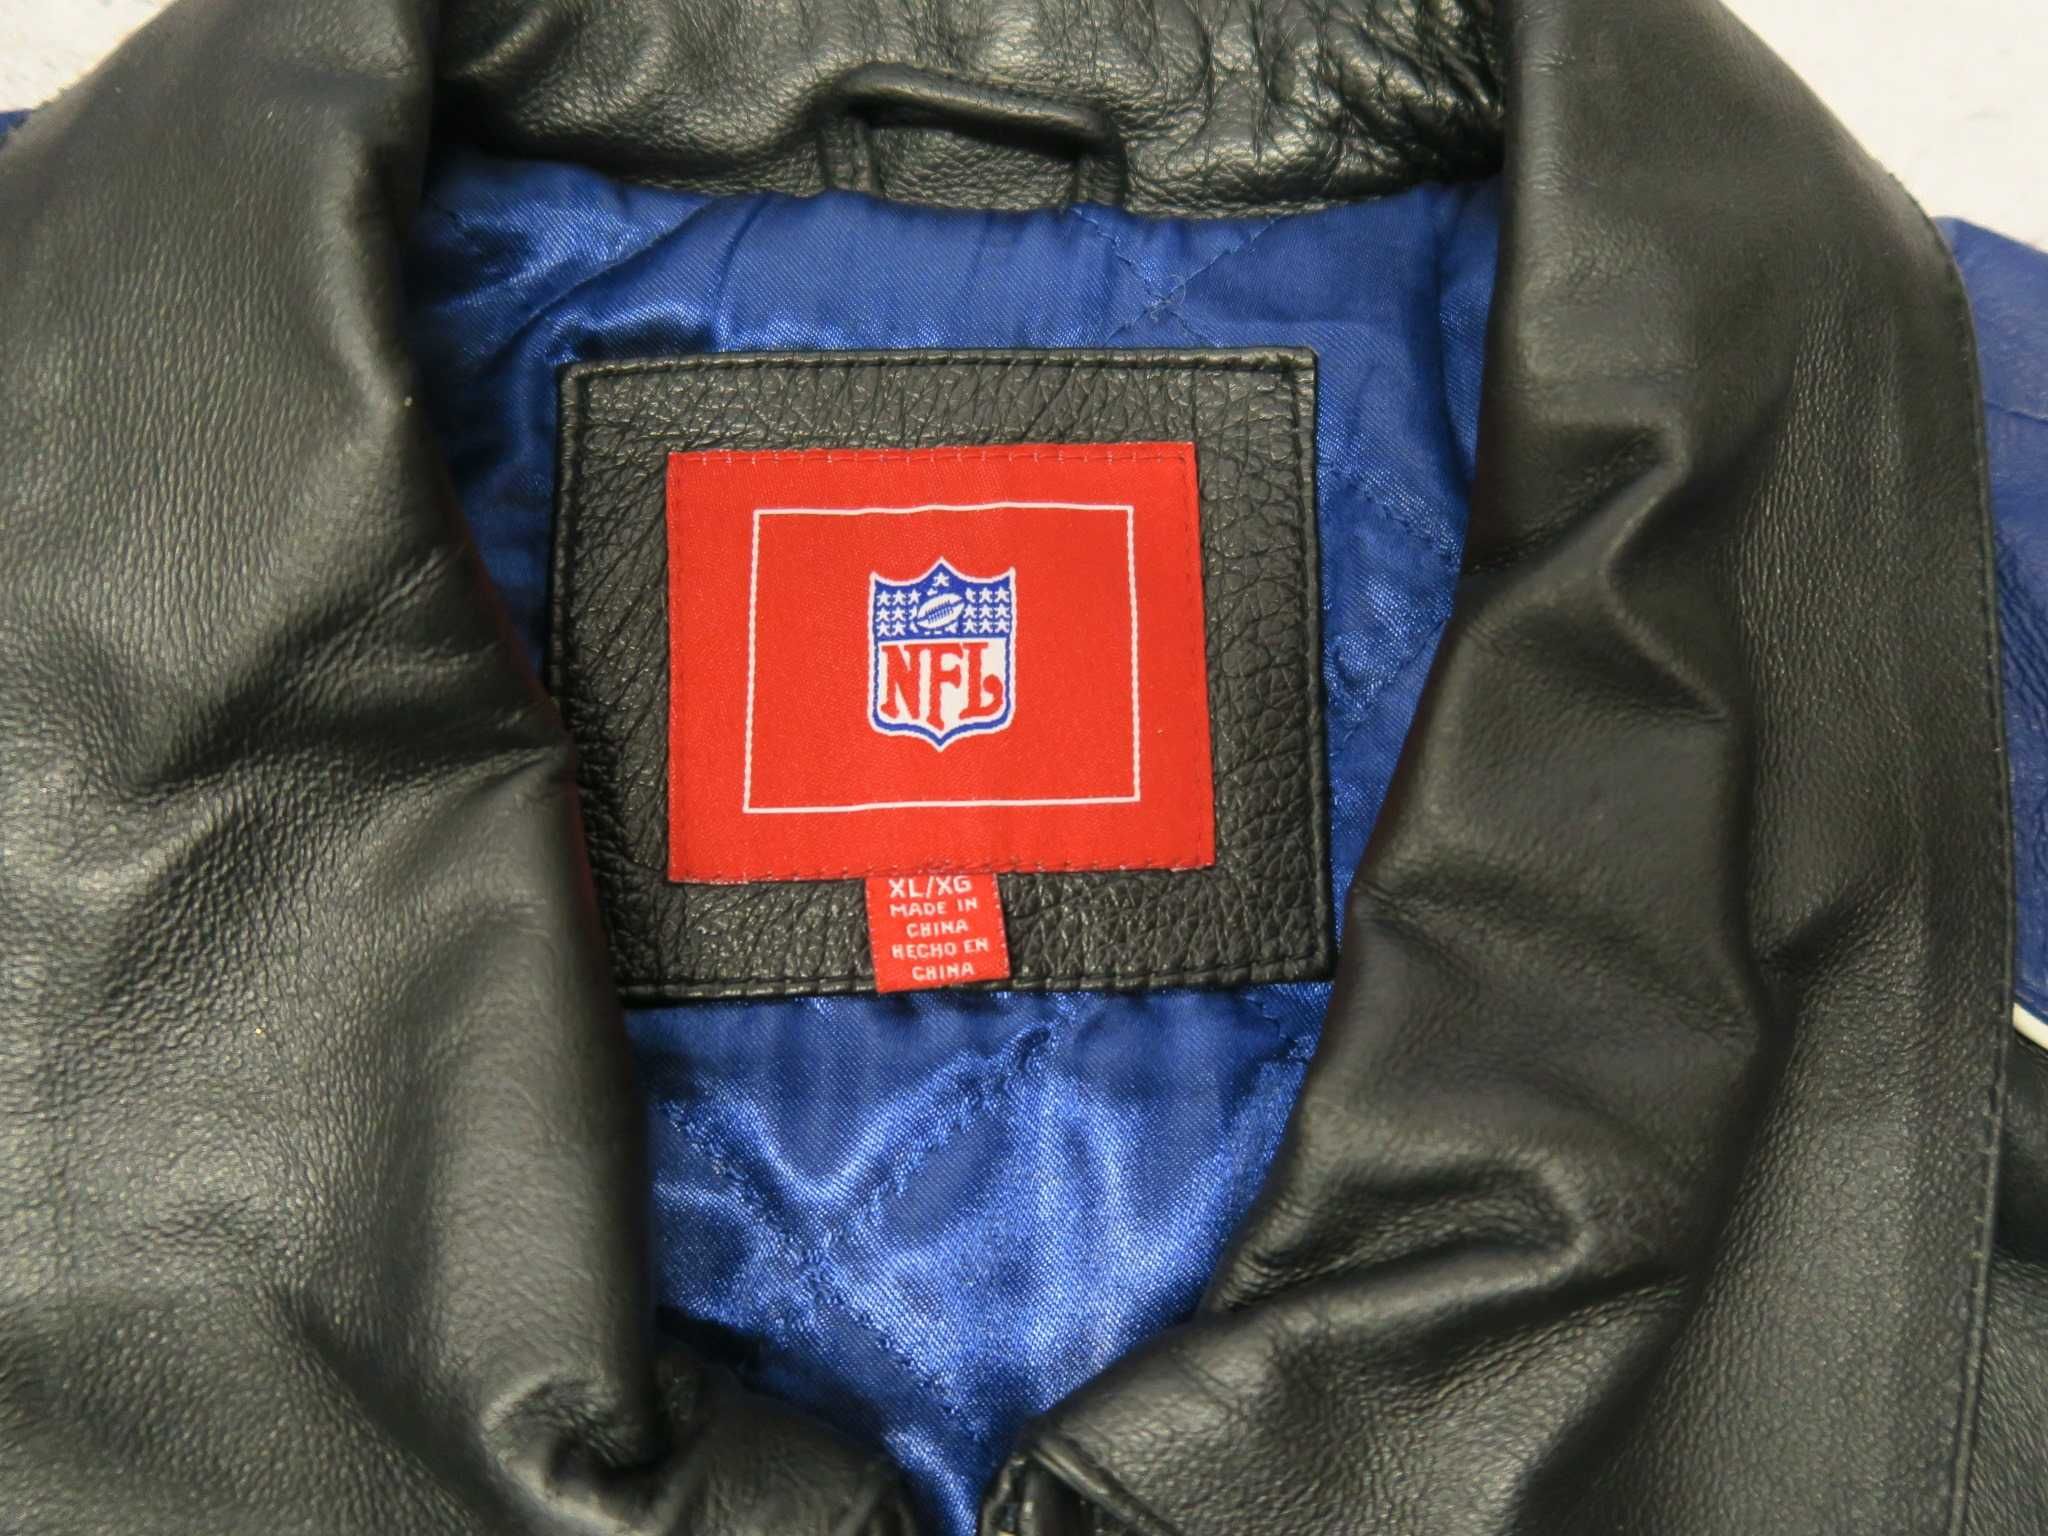 NFL Super Bowl 2006 bomberka vintage kurtka skórzana XL